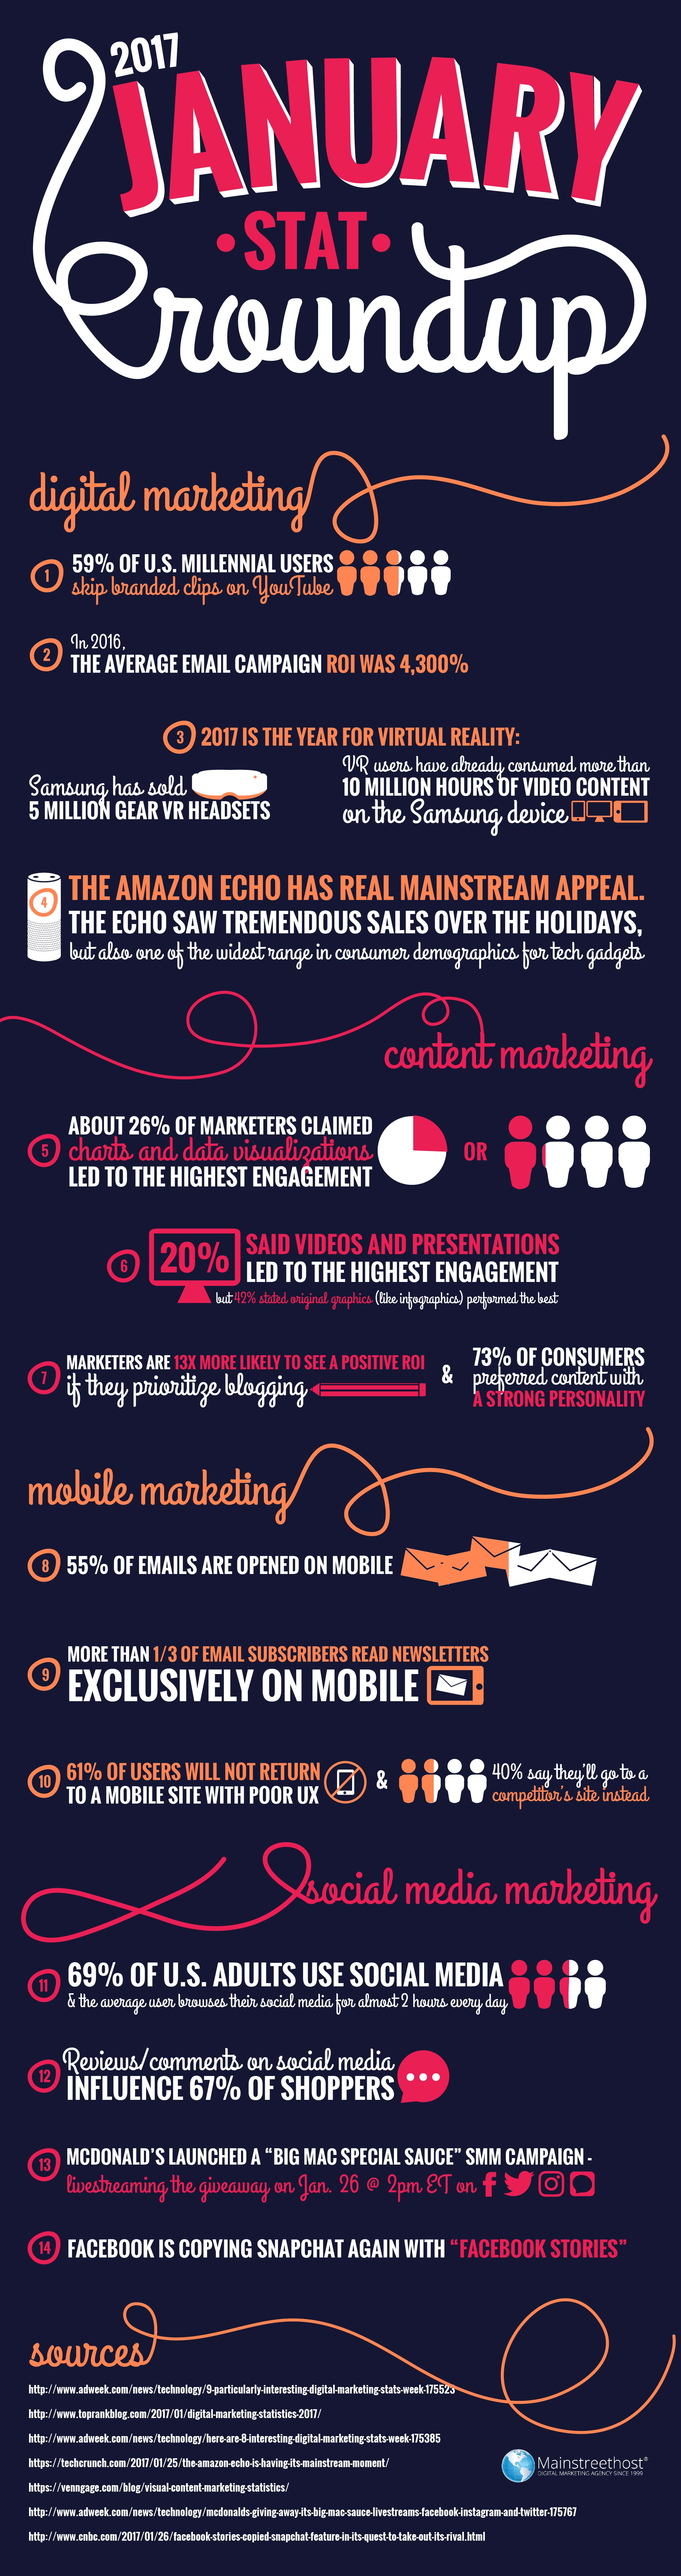 Digital Marketing January Roundup Infographic